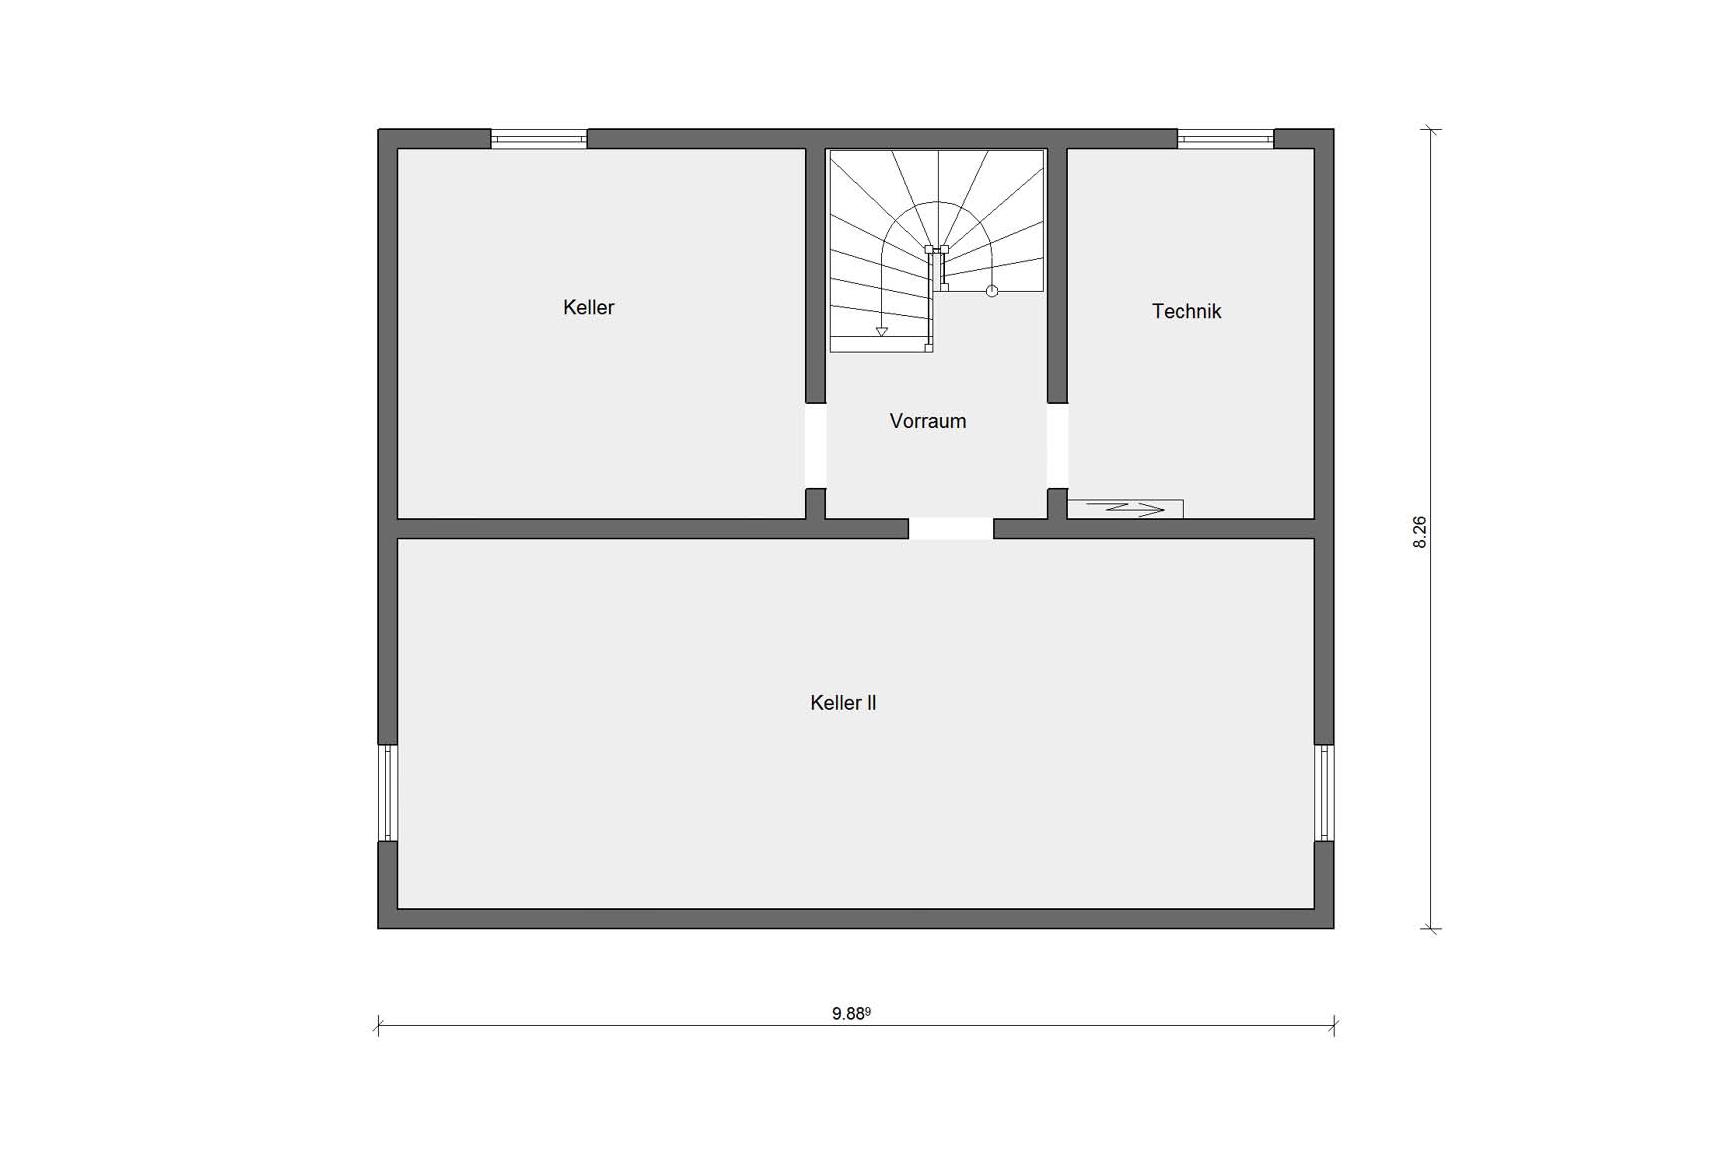 Basement floor plan E 15-140.4 House with office